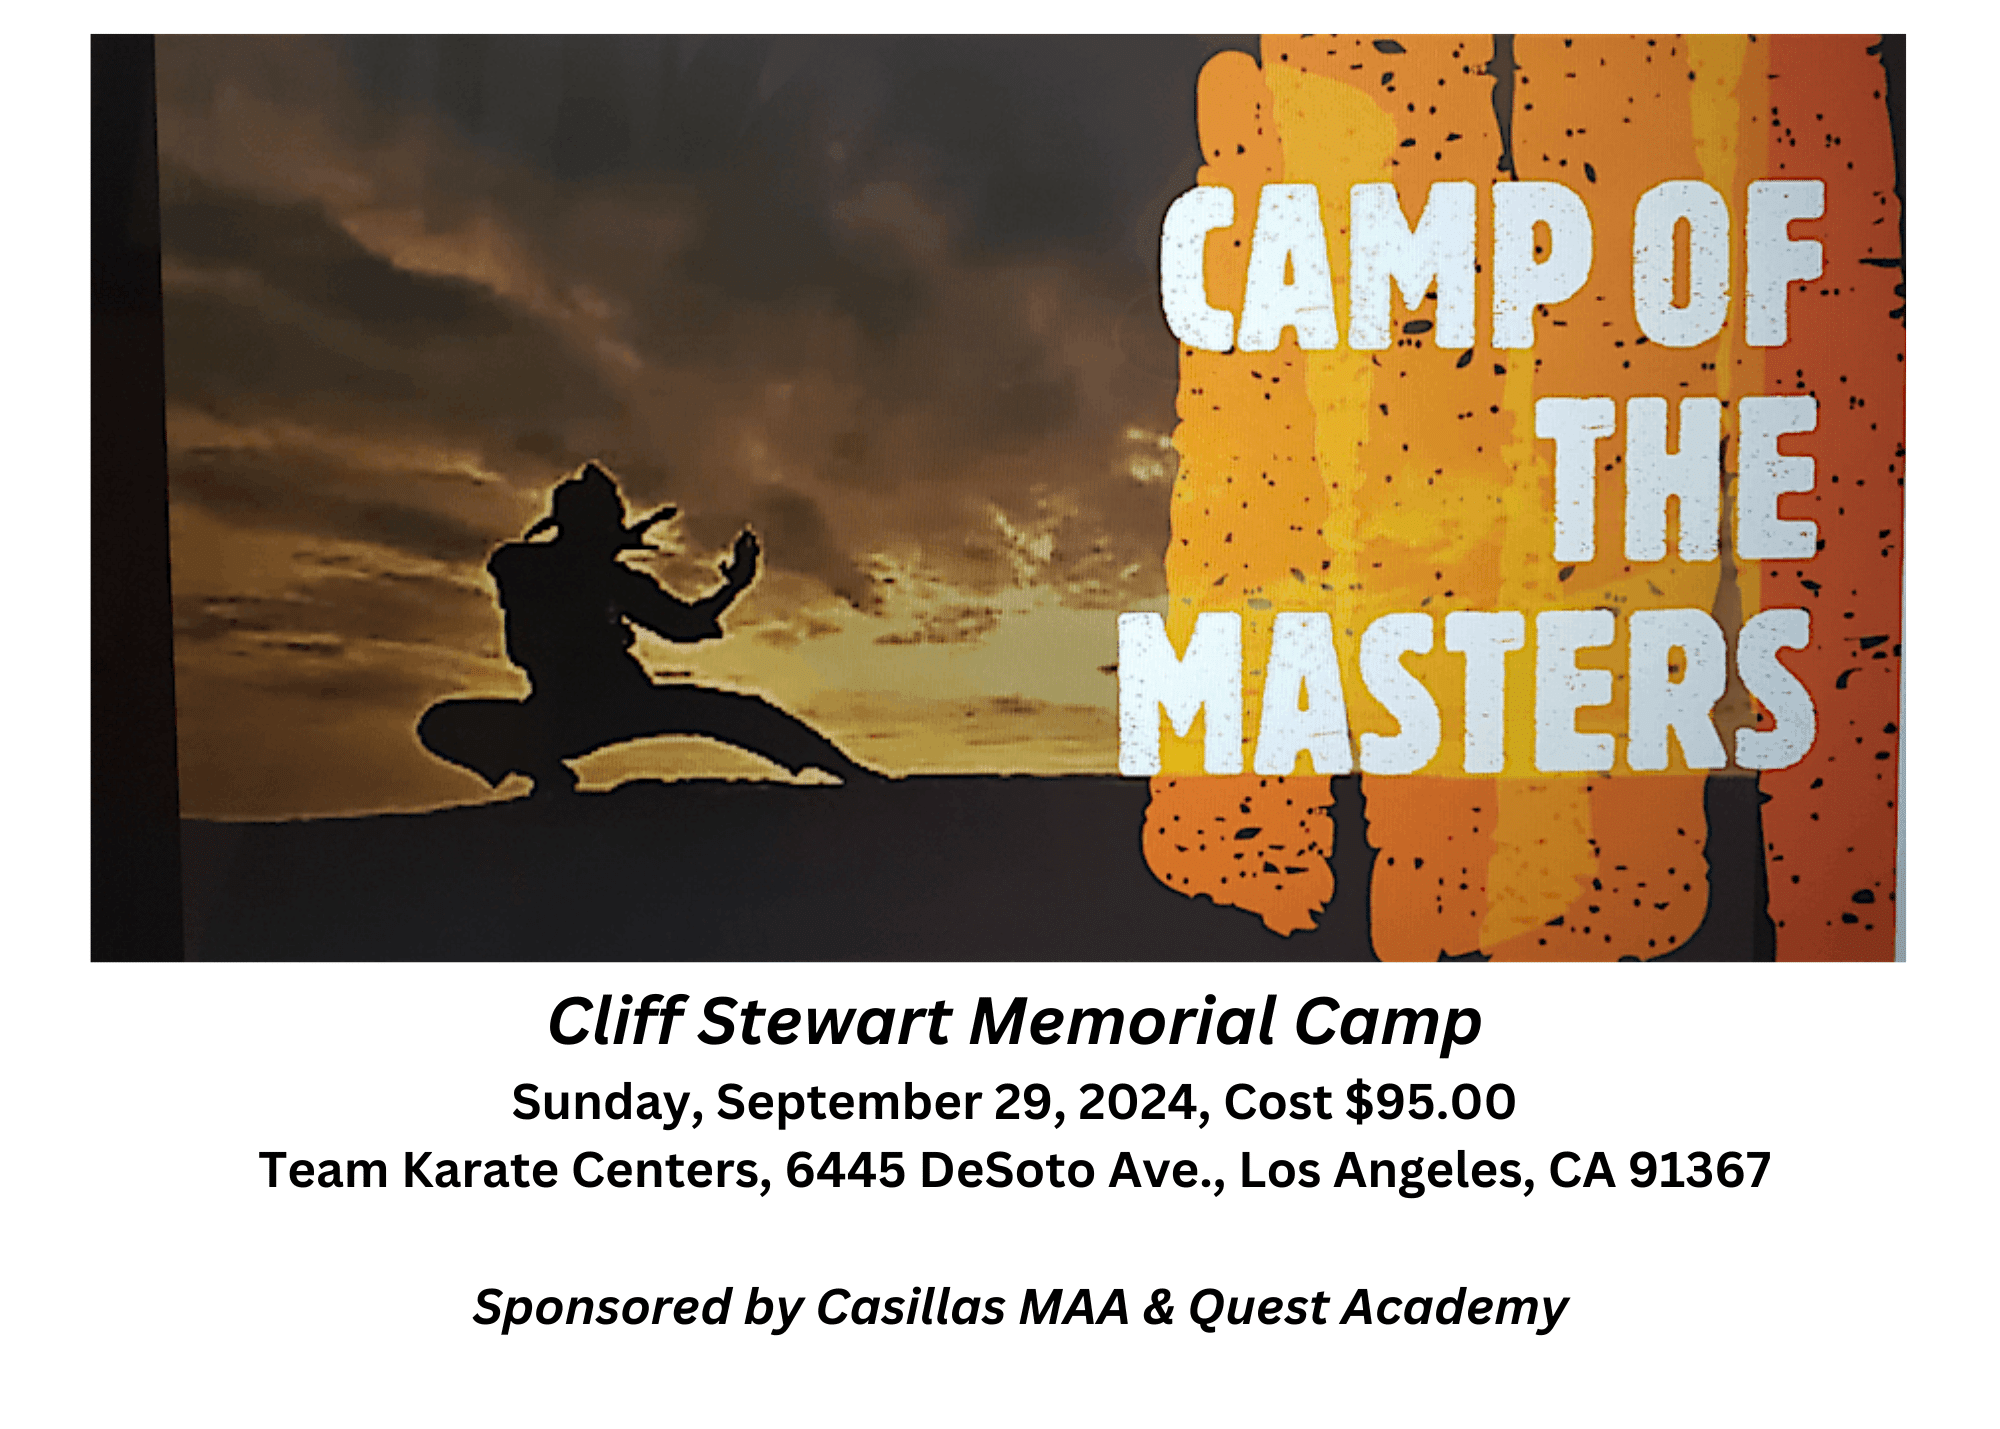 Cliff Stewart Memorial Camp Sunday,Sept 29, 2024